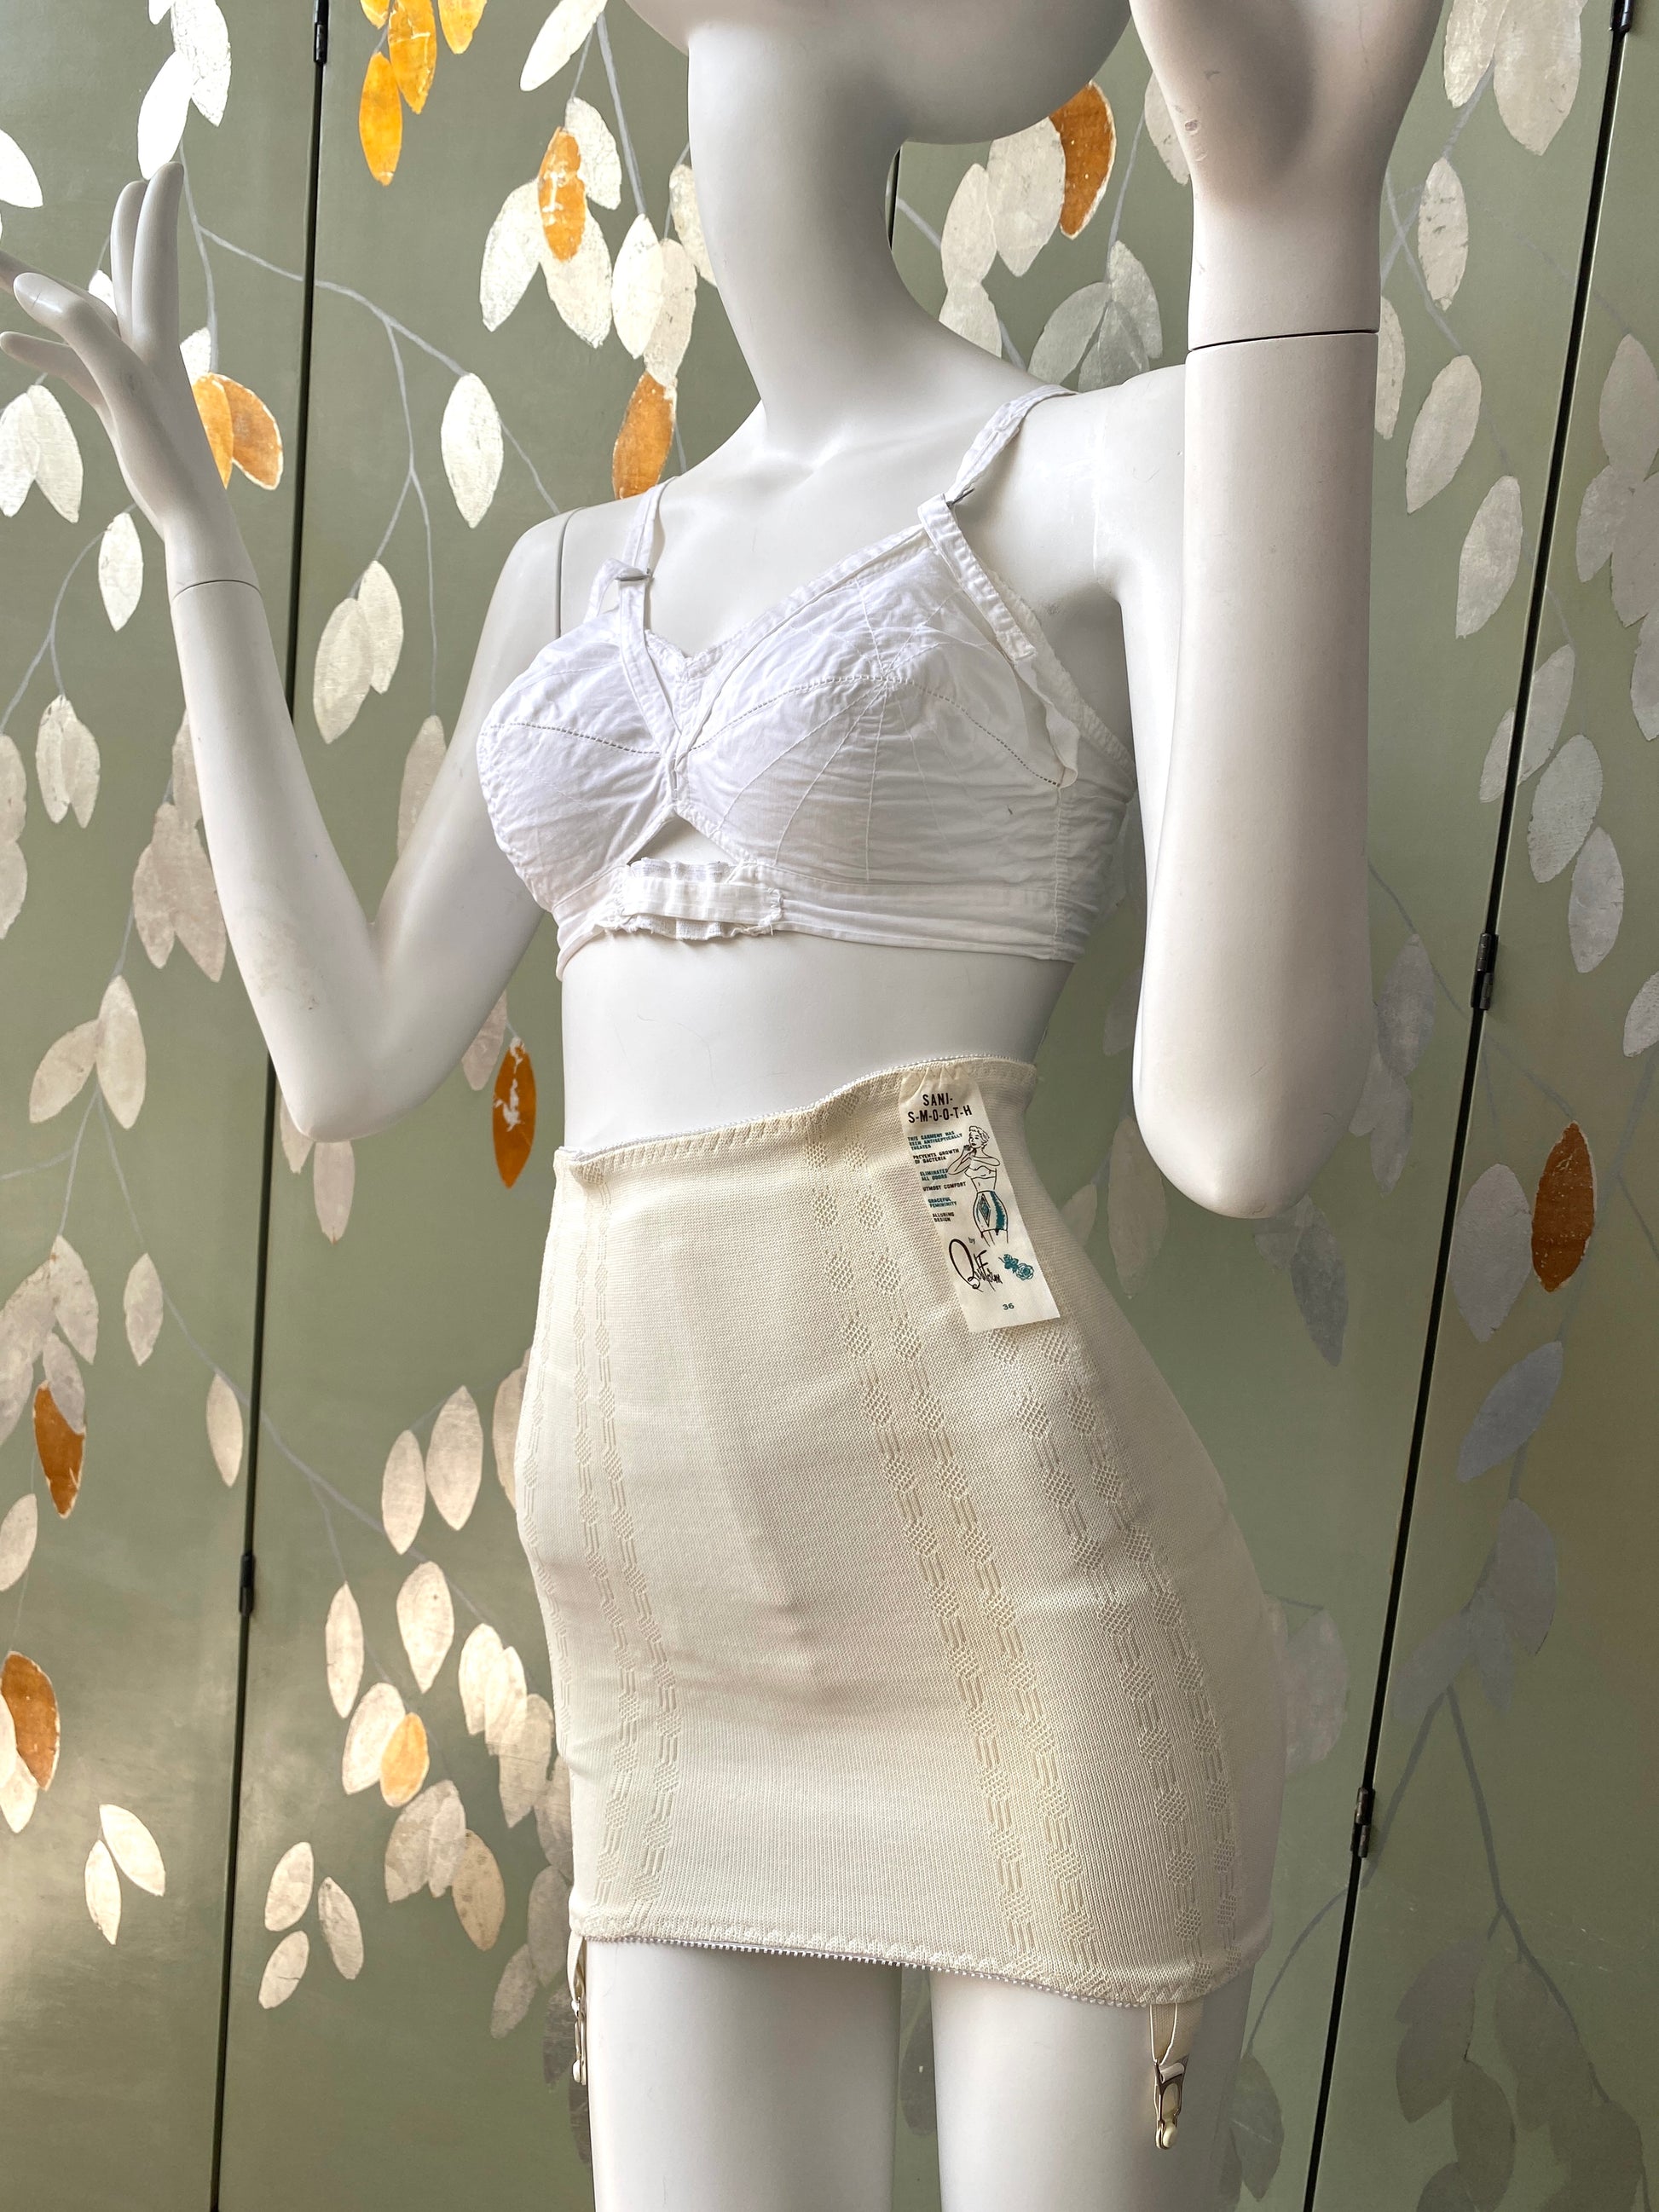 Vintage Deadstock 40s 50s French Boned Corset Girdle Skirt in Pale